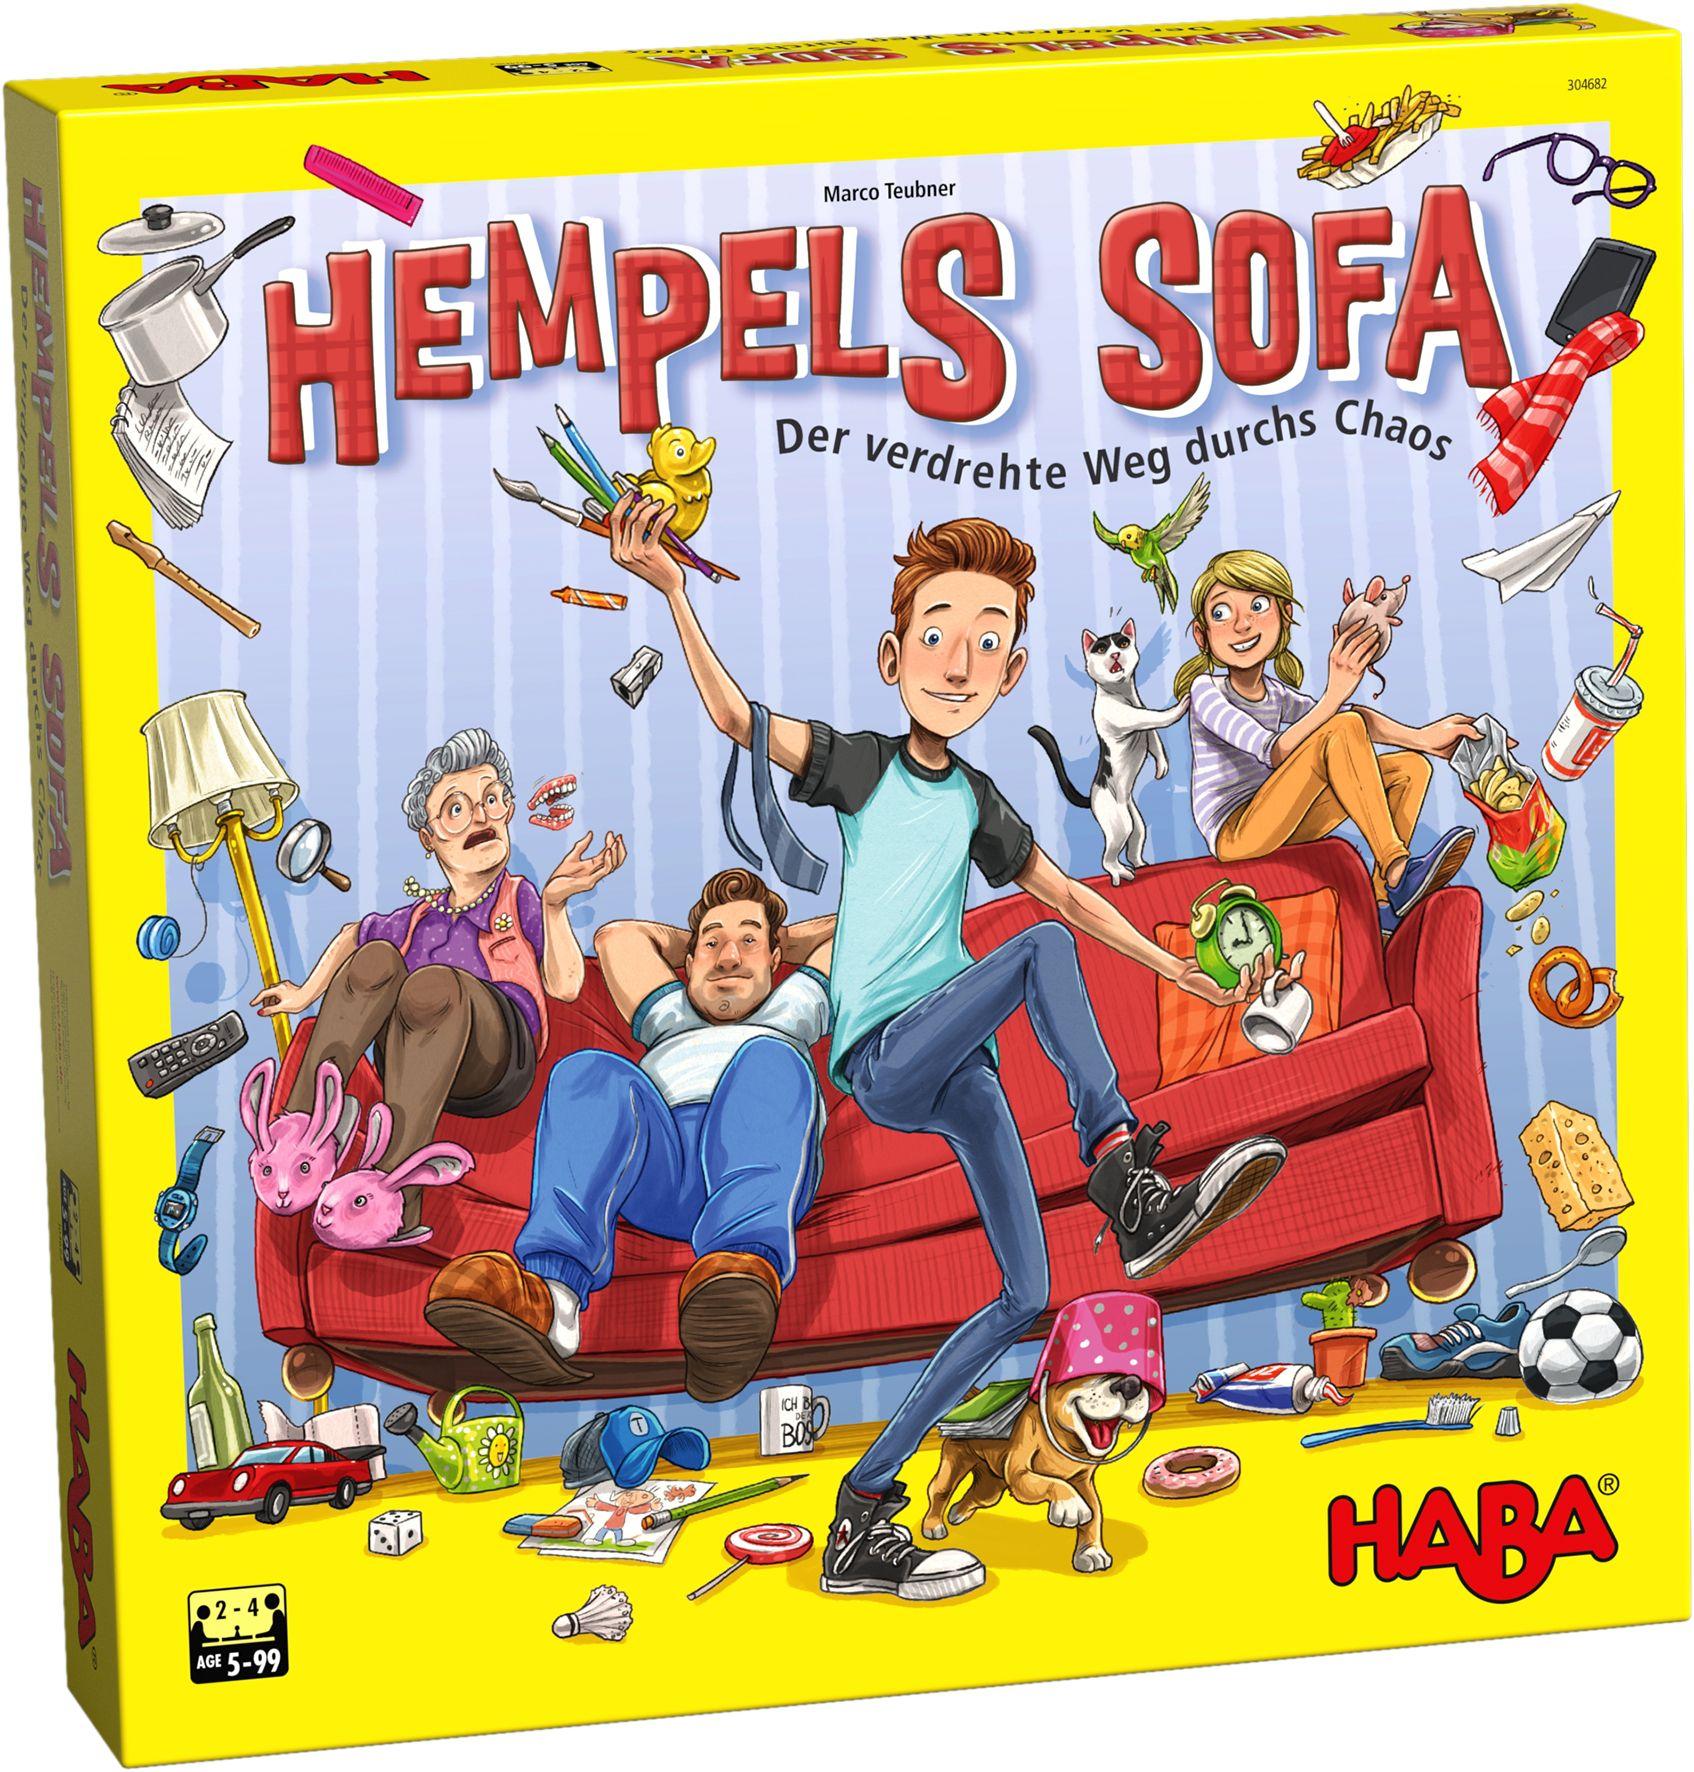 Hempels Sofa